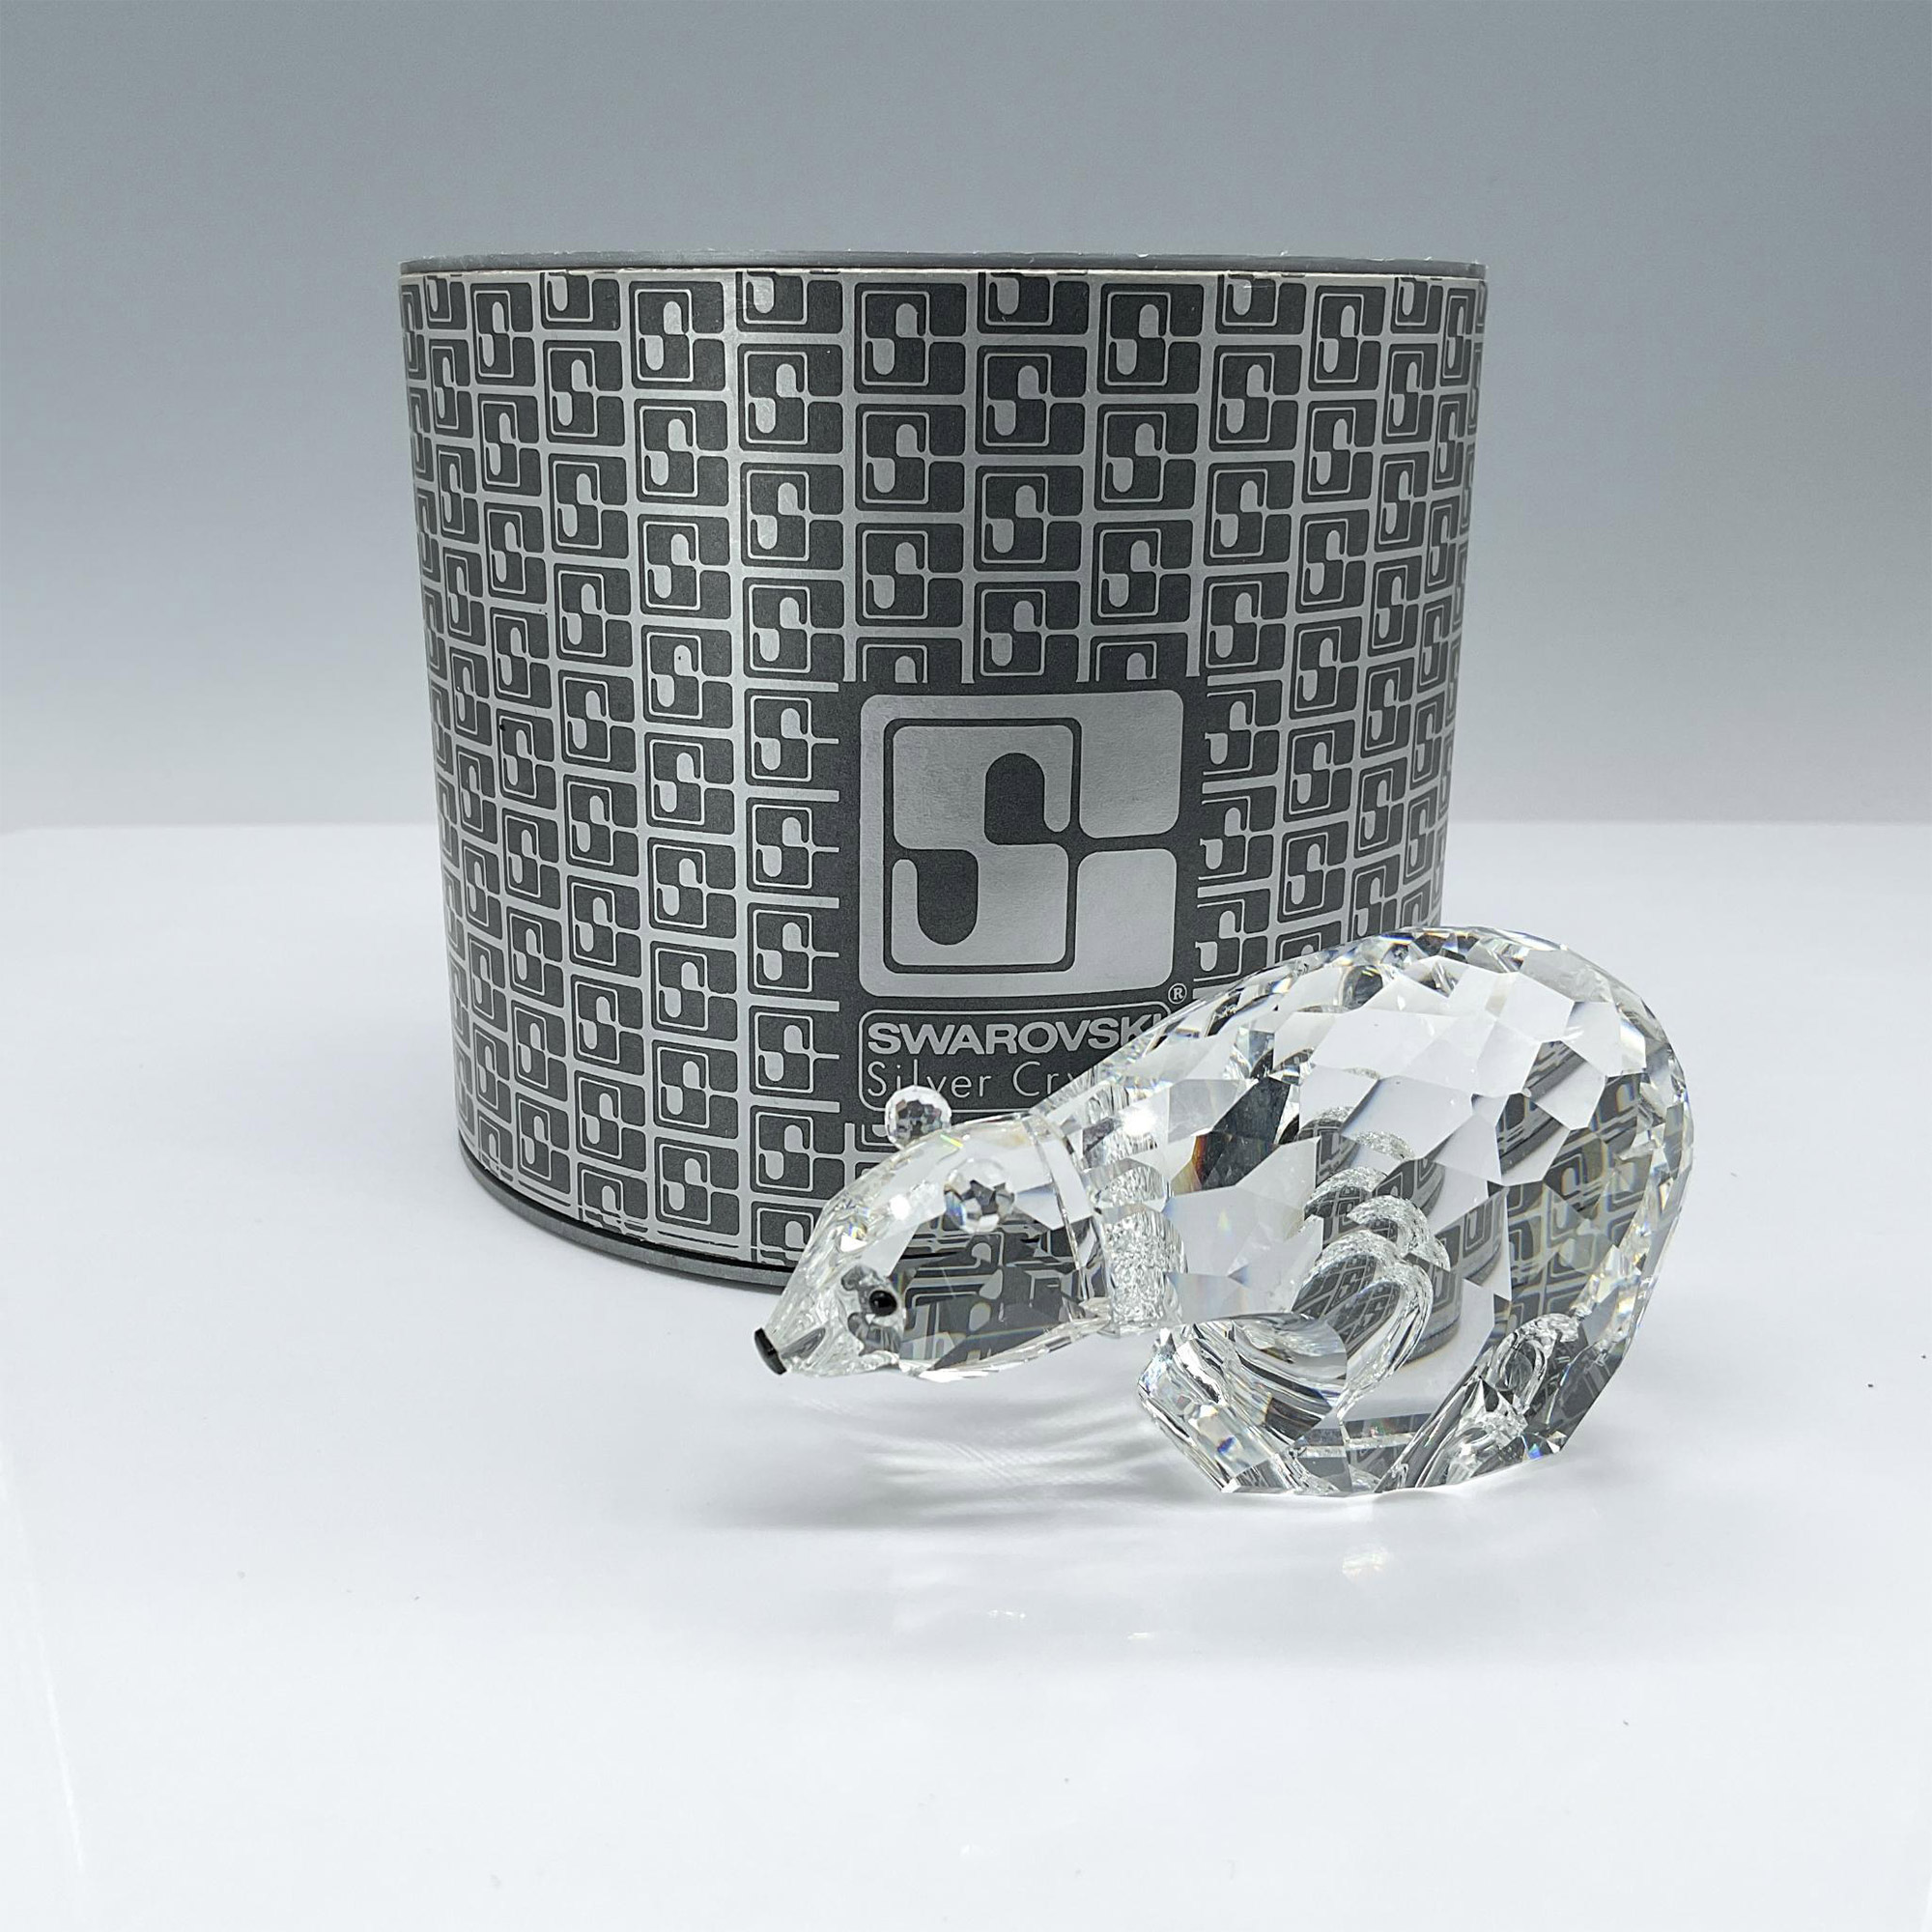 Swarovski Crystal Figurine, Polar Bear - Image 4 of 4